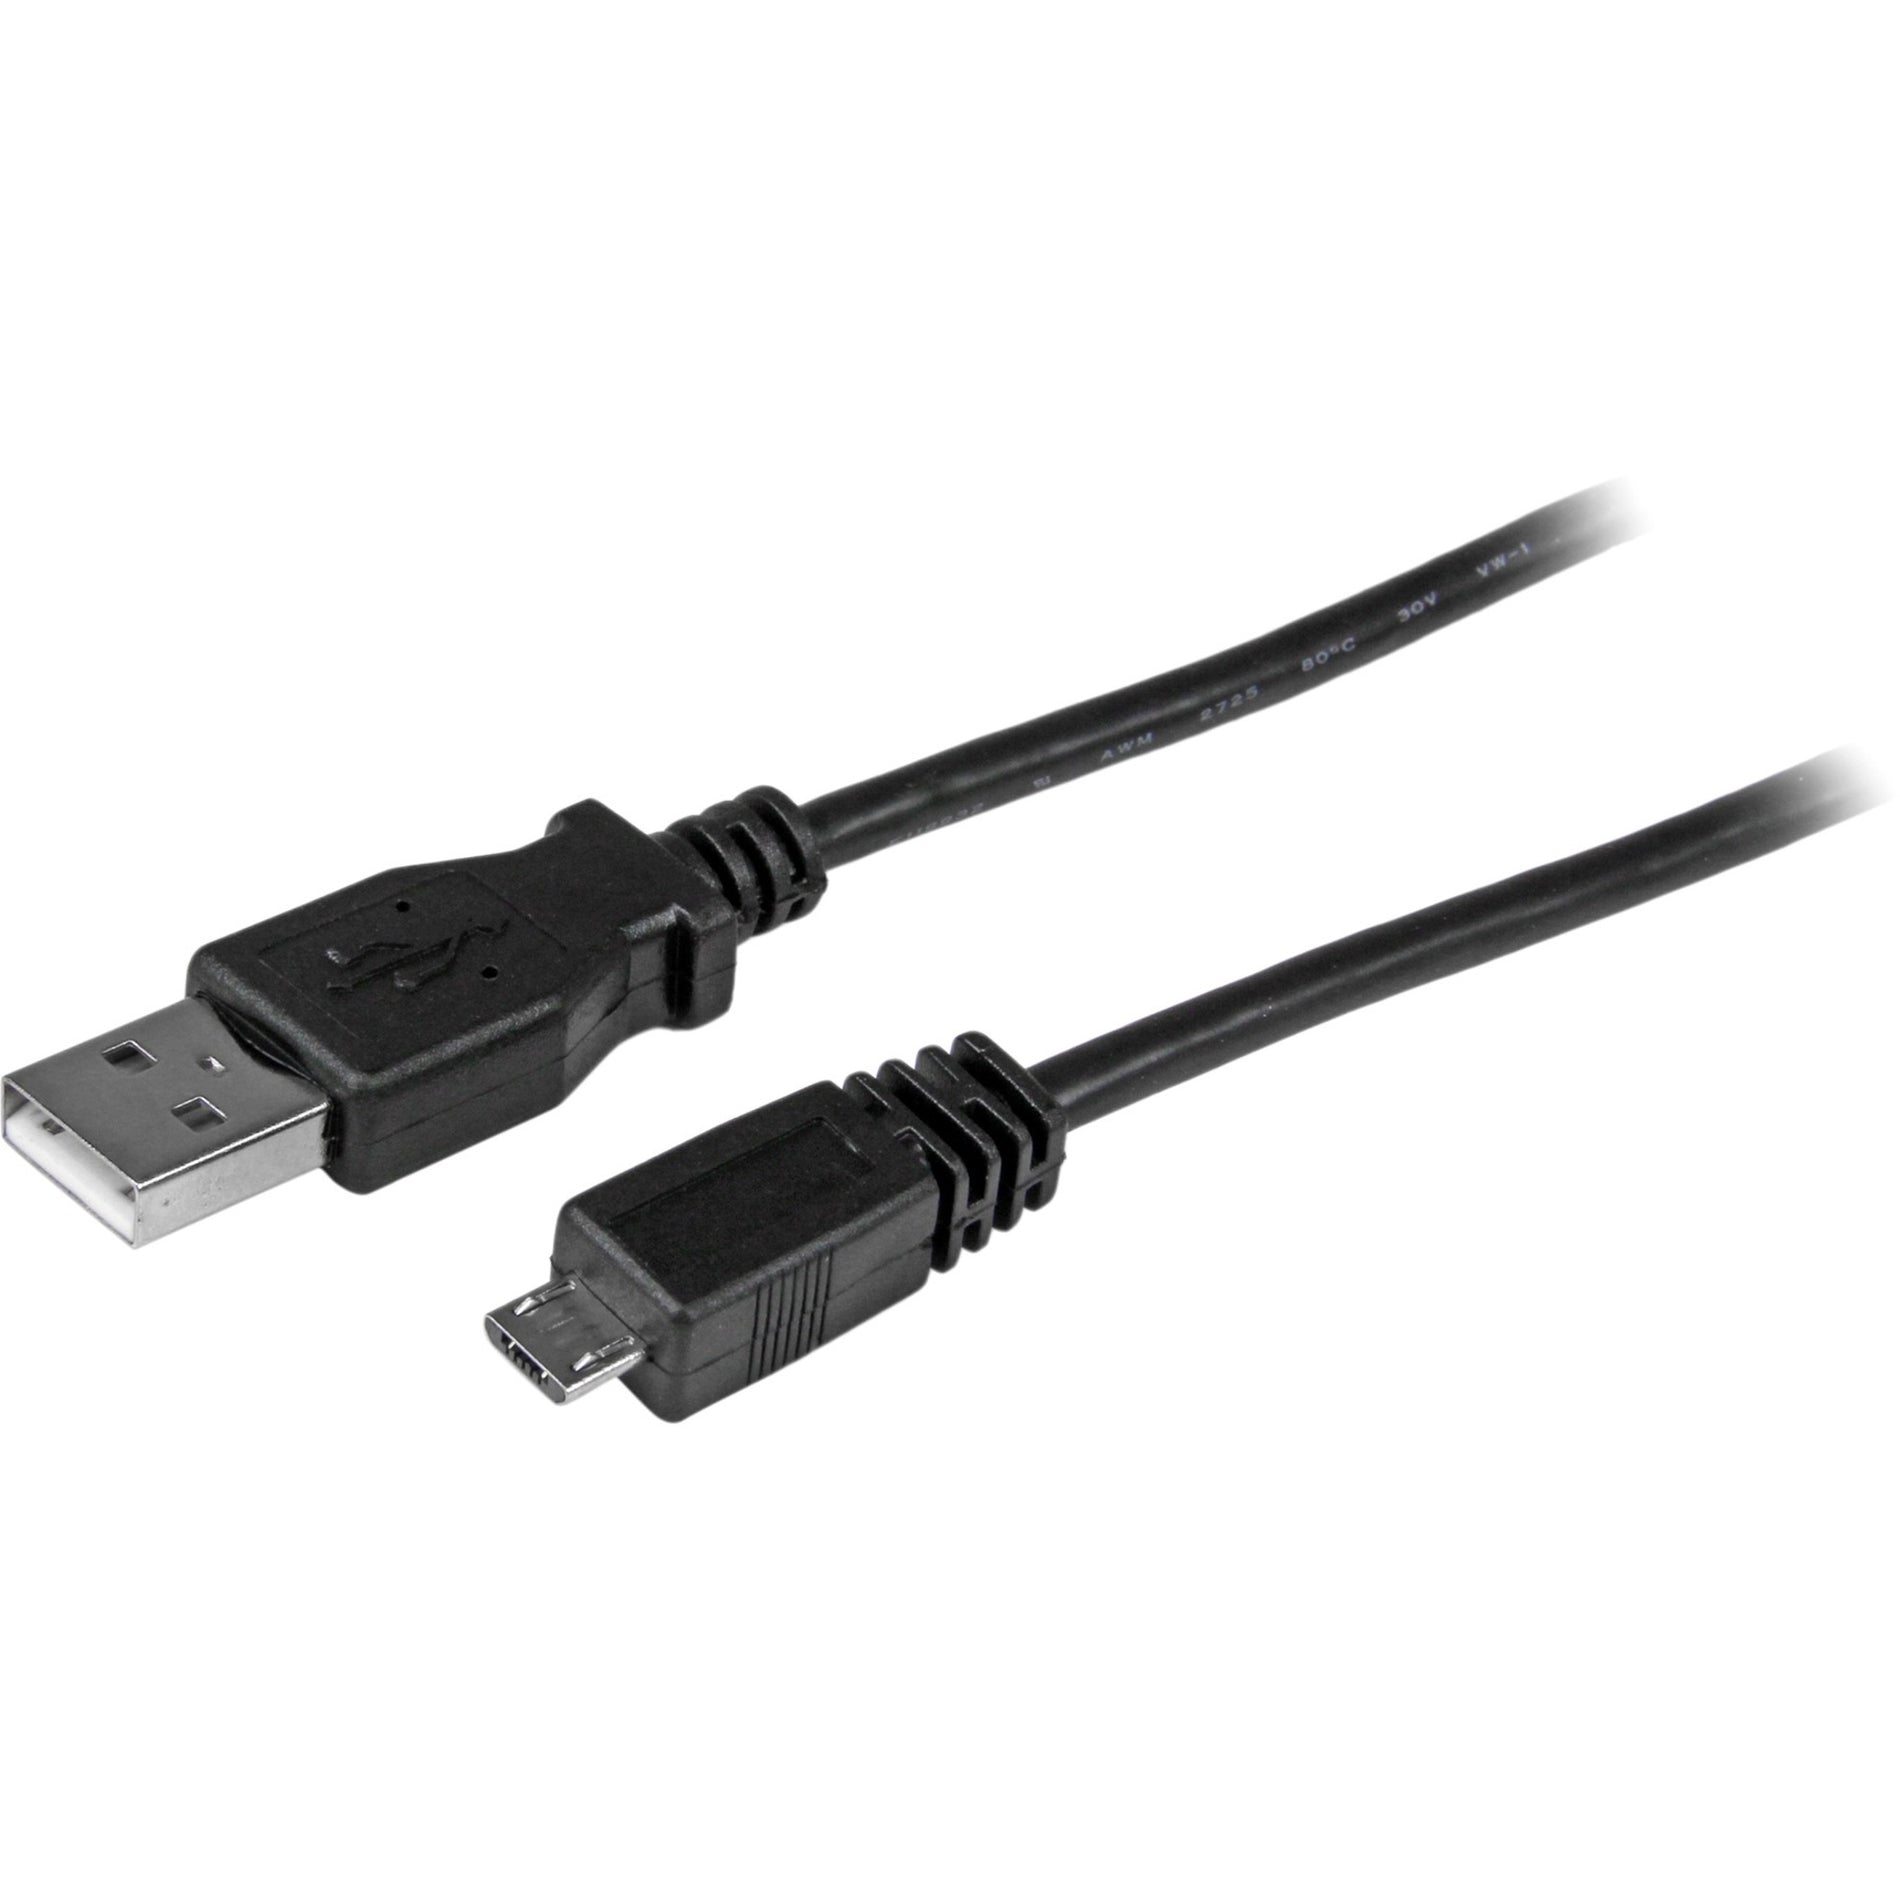 StarTech.com UUSBHAUB6 微型 USB 电缆，6英尺数据传输电缆，铜导体，USB 2.0 类型 A - 男 到 微型 USB 2.0 类型 B - 男，黑色 星美科技